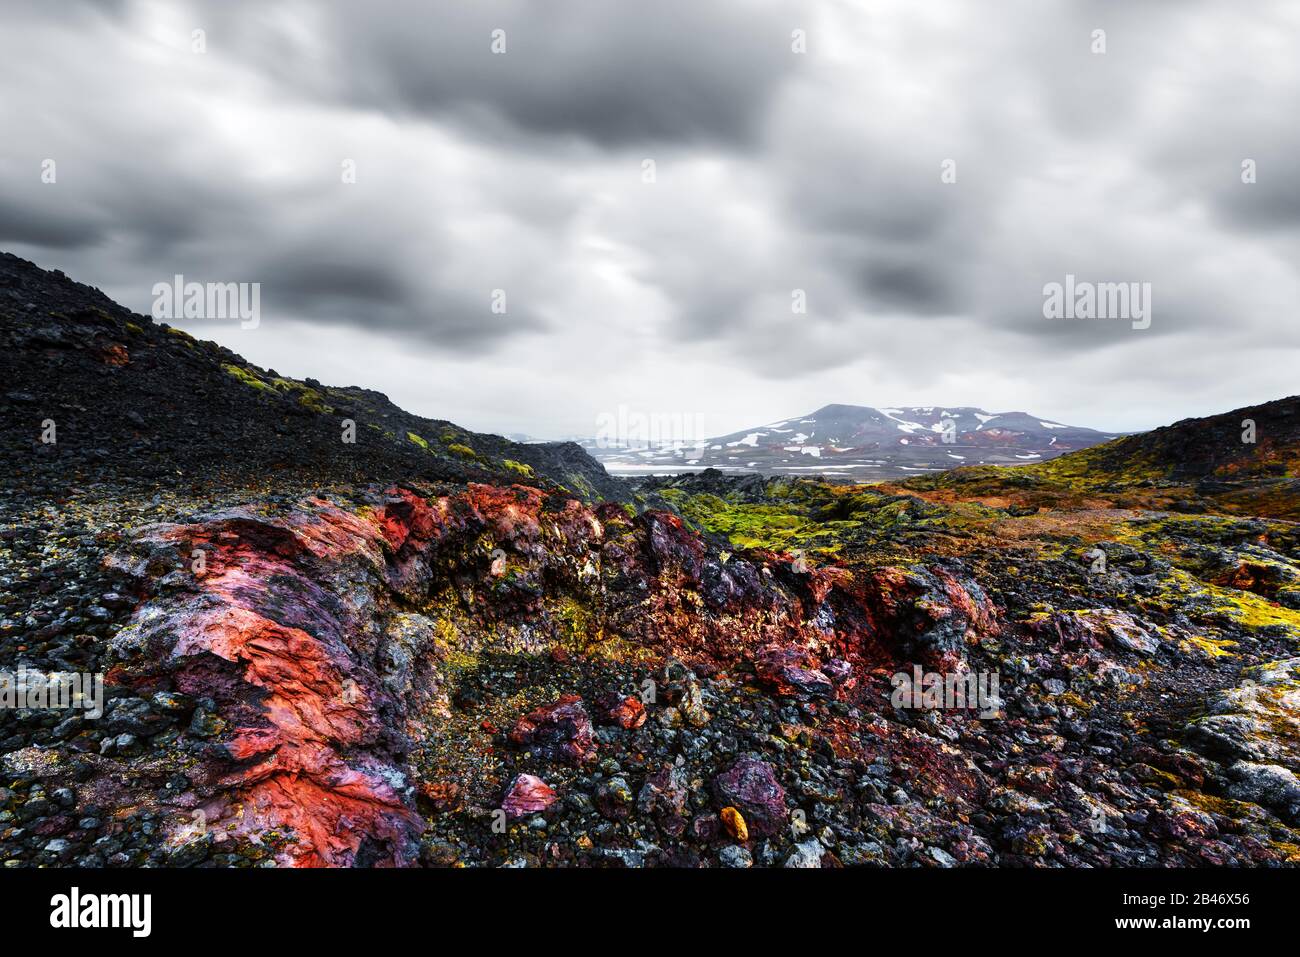 Gefrorenes Lavafeld im Erdothermaltal Leirhnjukur, in der Nähe des Vulkans Krafla, Island, Europa. Landschaftsfotografie Stockfoto